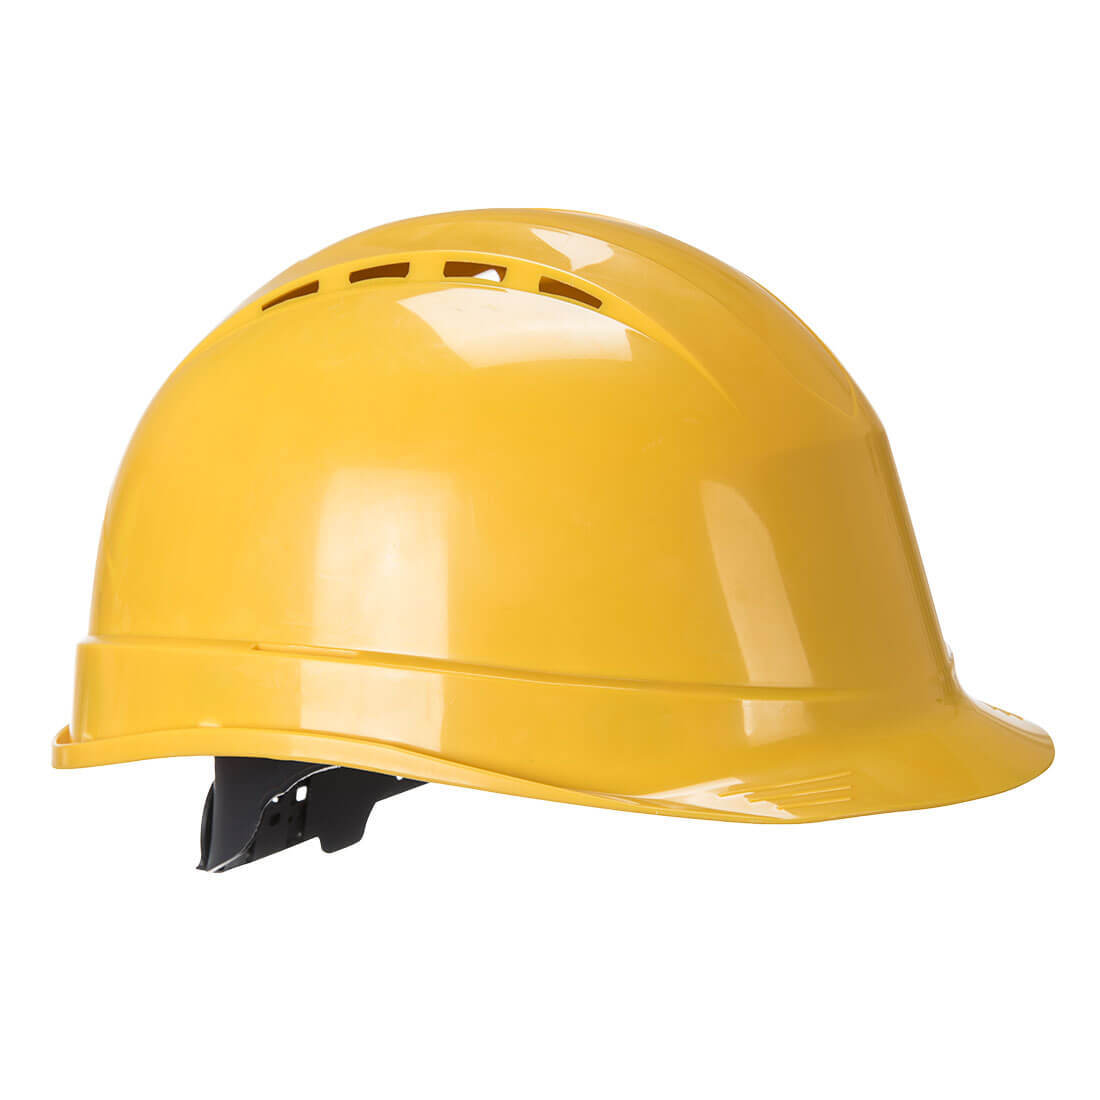 Arrow Safety Helmet - PS50 - I Want Workwear